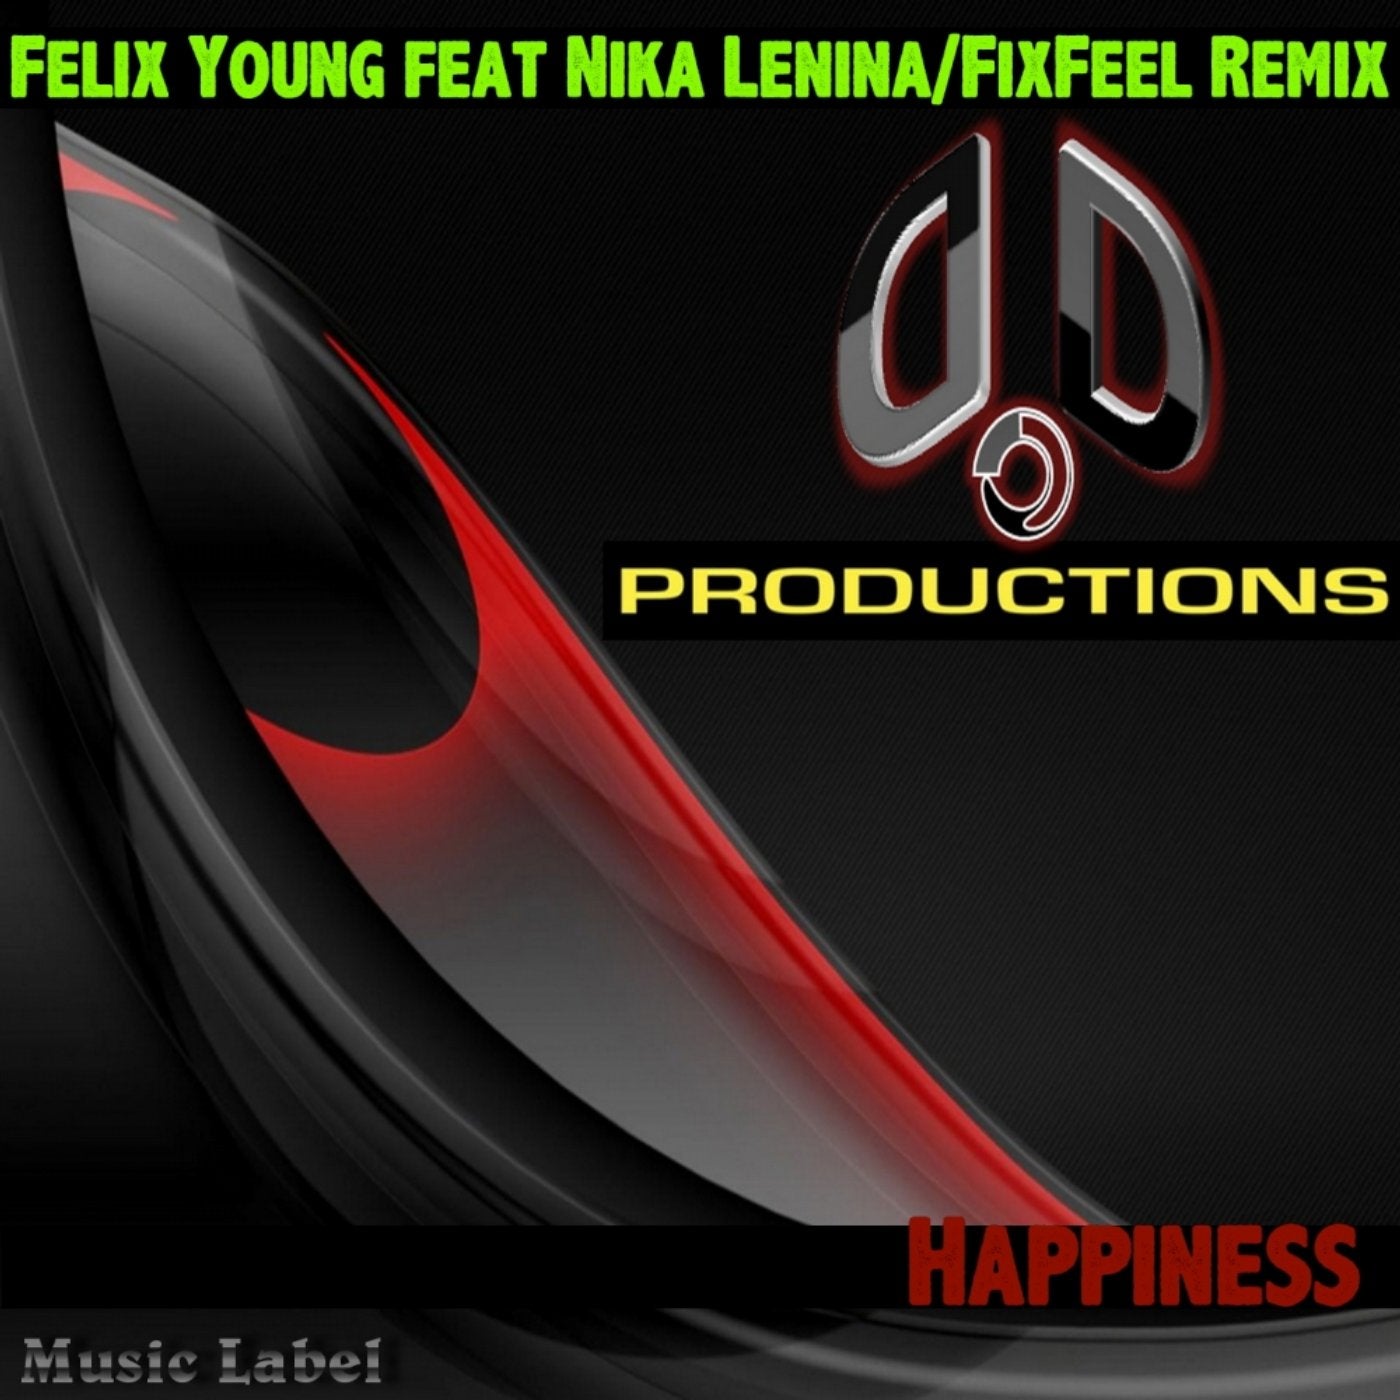 Happiness (Fixfeel Remix)